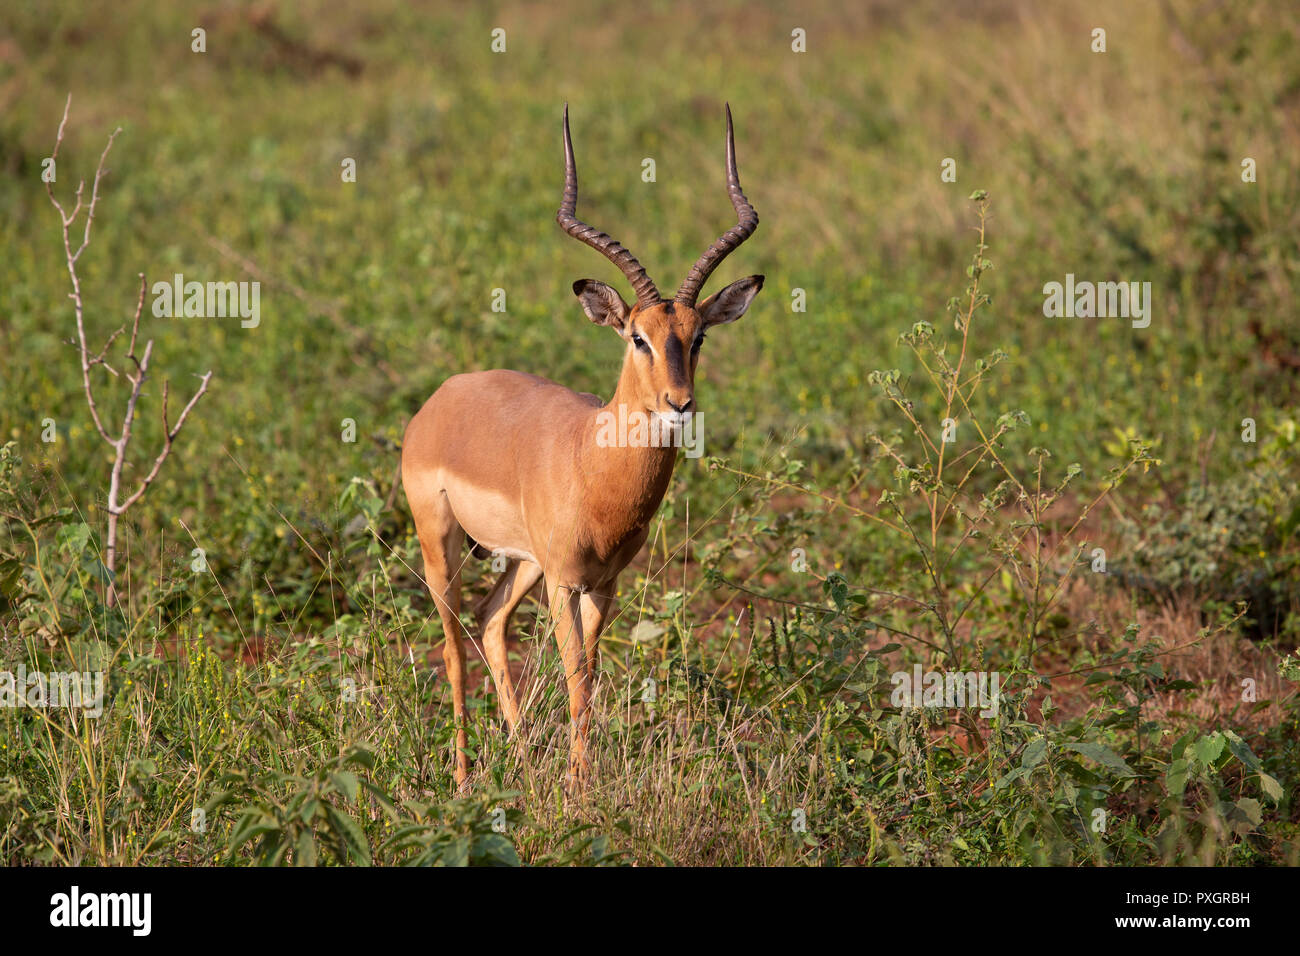 Ram Impala Aepyceros melampus in Buschland in Südafrika Stockfoto